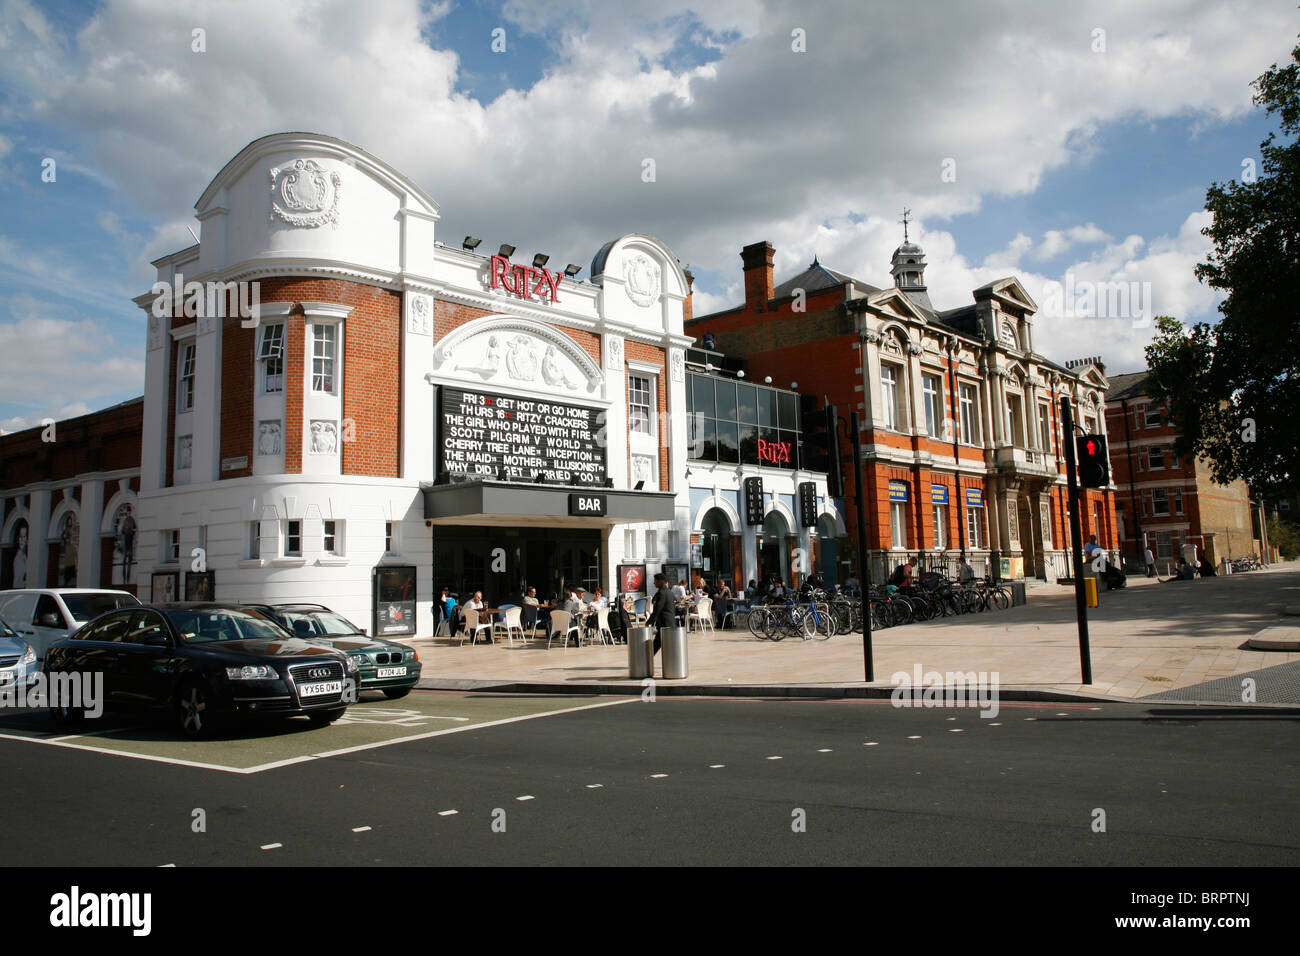 Ritzy cinema in Brixton, London, UK Stock Photo